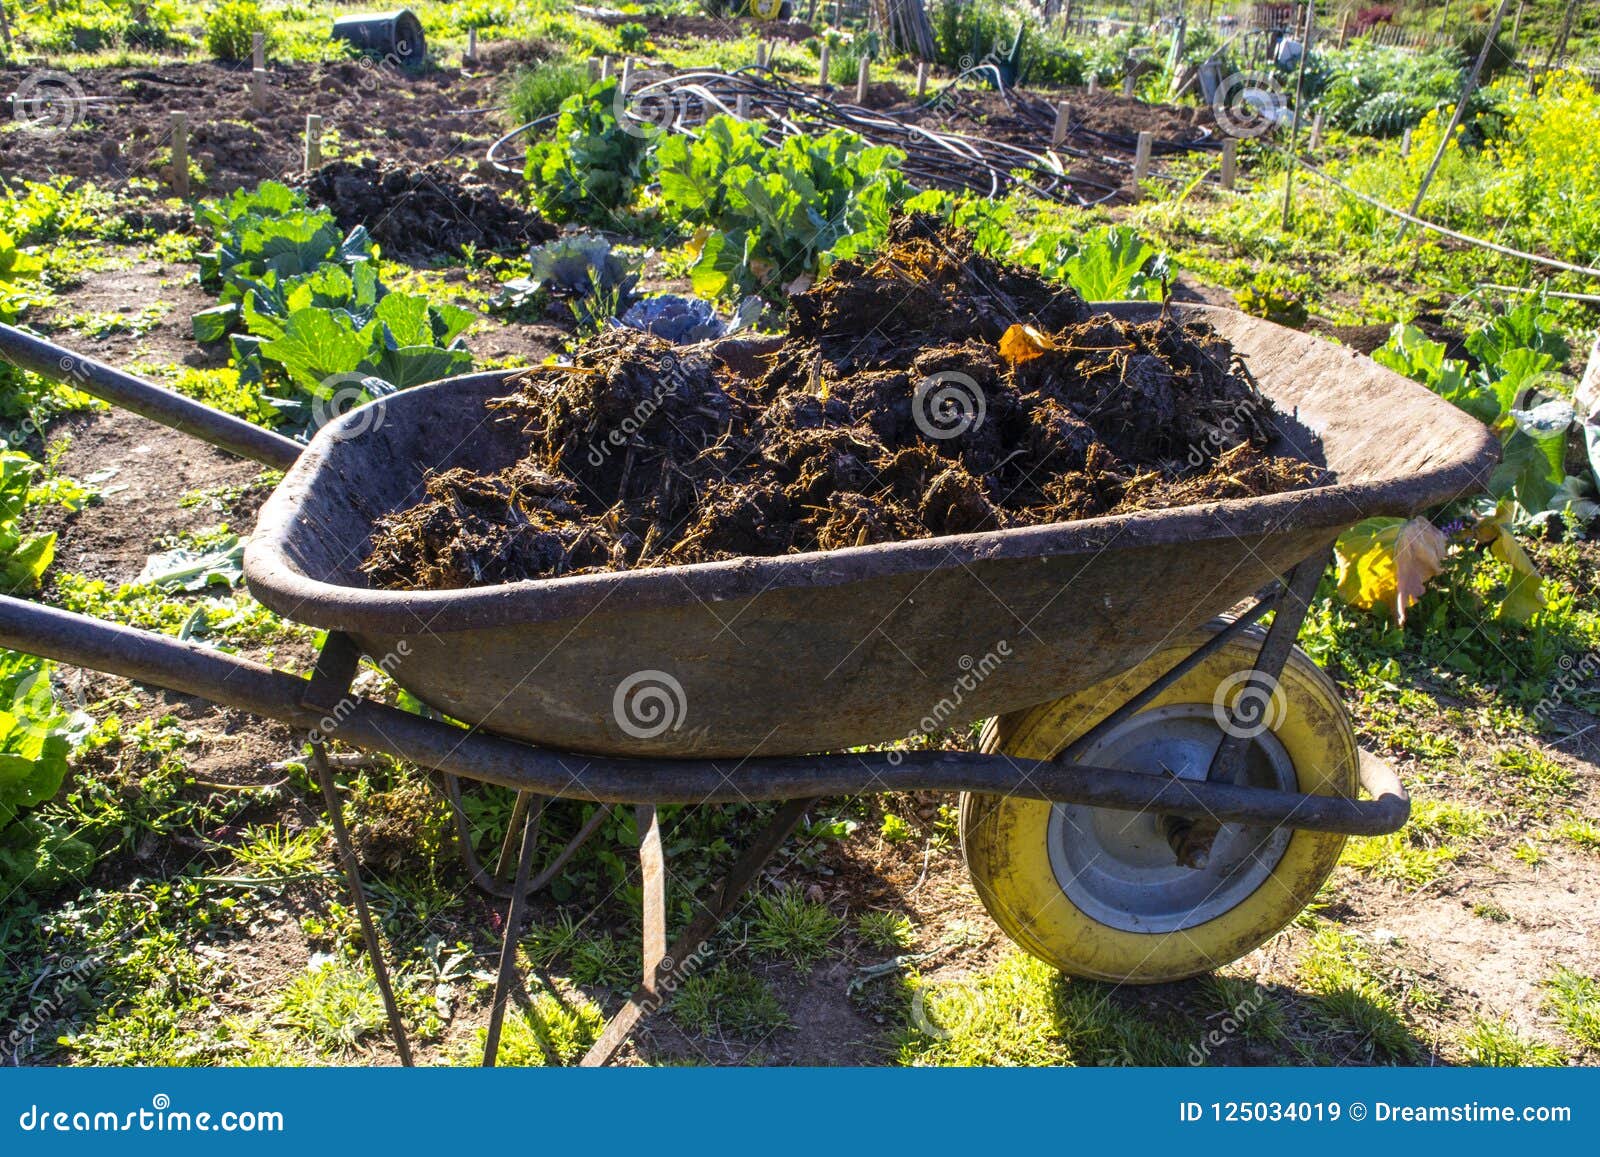 Wheelbarrow Full Of Manure In A Vegetable Garden Stock Image